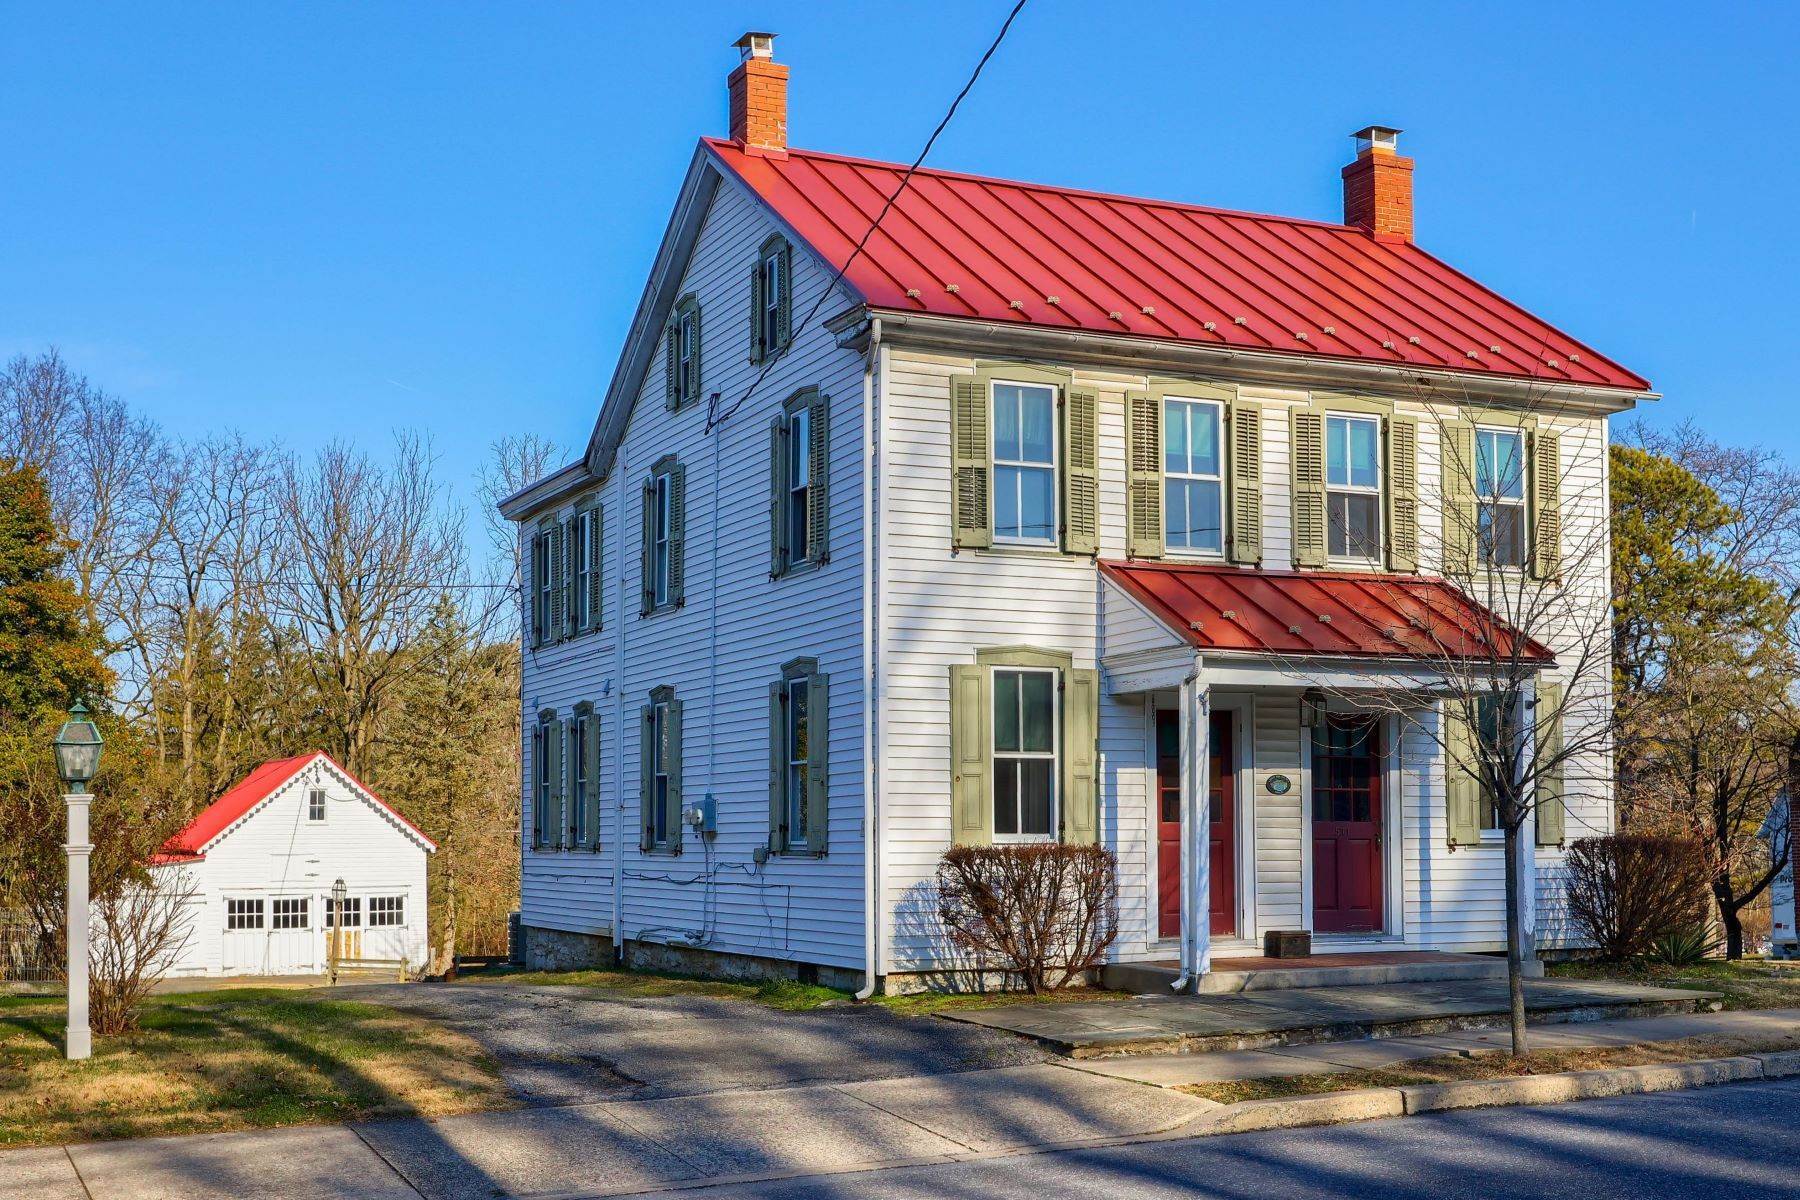 Single Family Homes for Sale at 511 E Main St Lititz, Pennsylvania 17543 United States